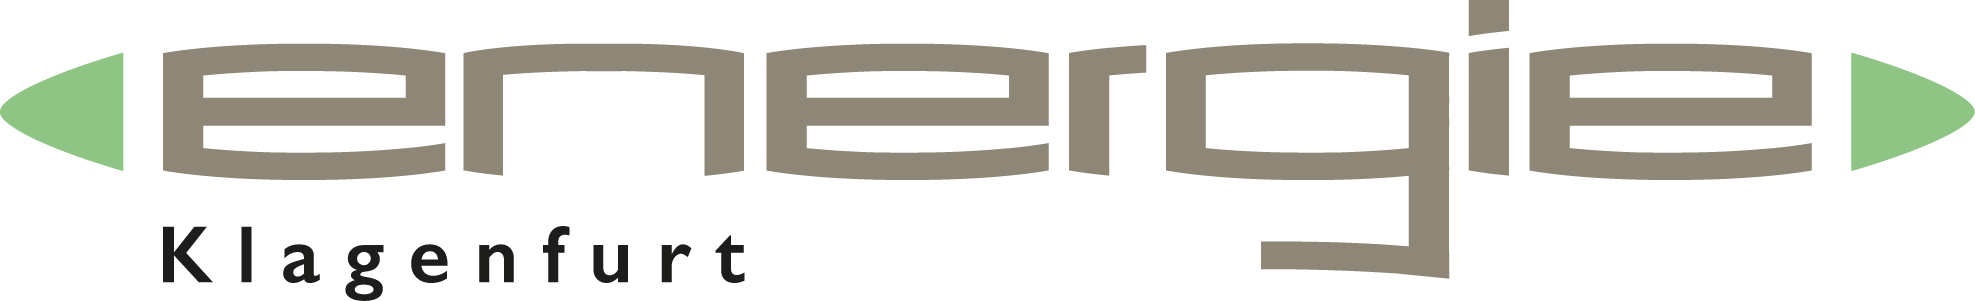 Energie Klagenfurt GmbH Logo